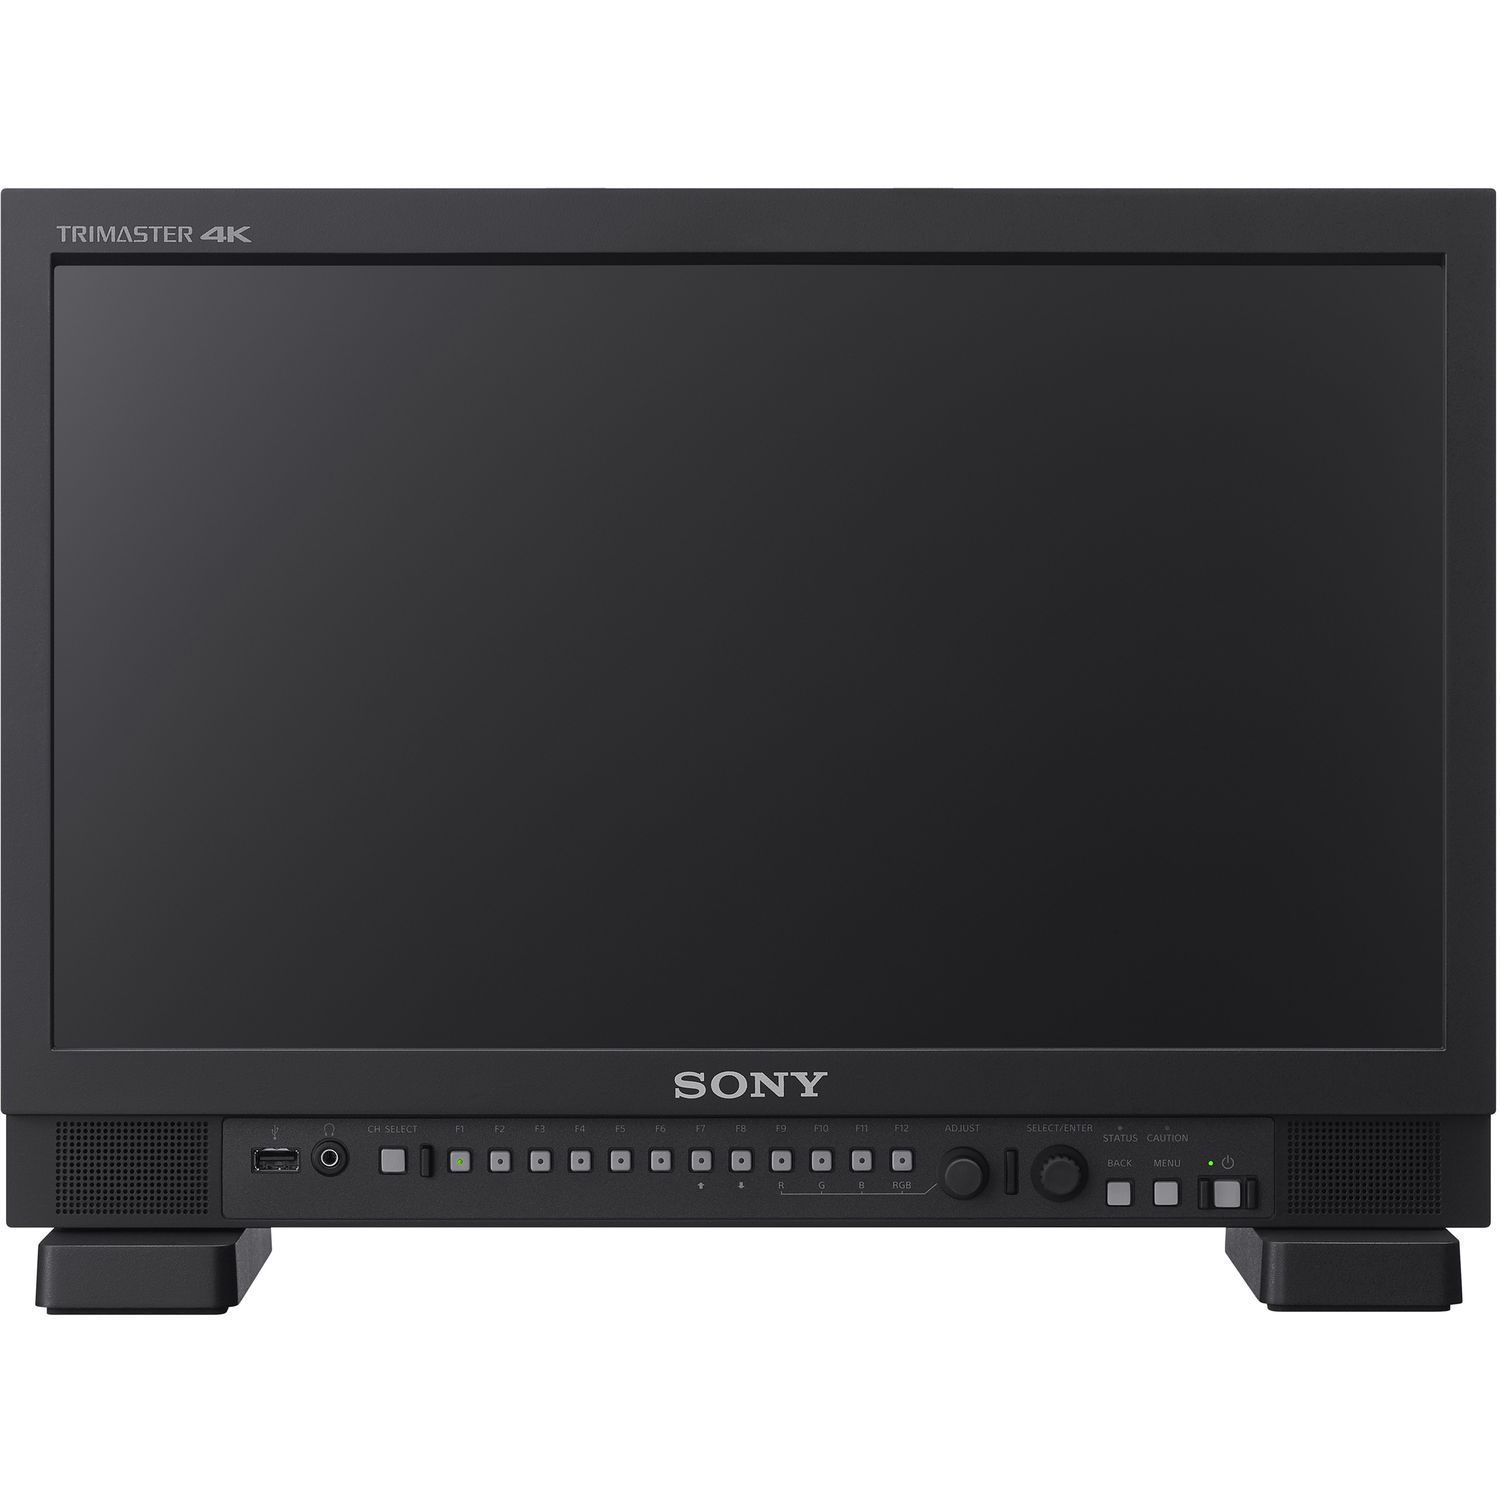 SONY - PVM-X1800 - 18" Professional Monitor